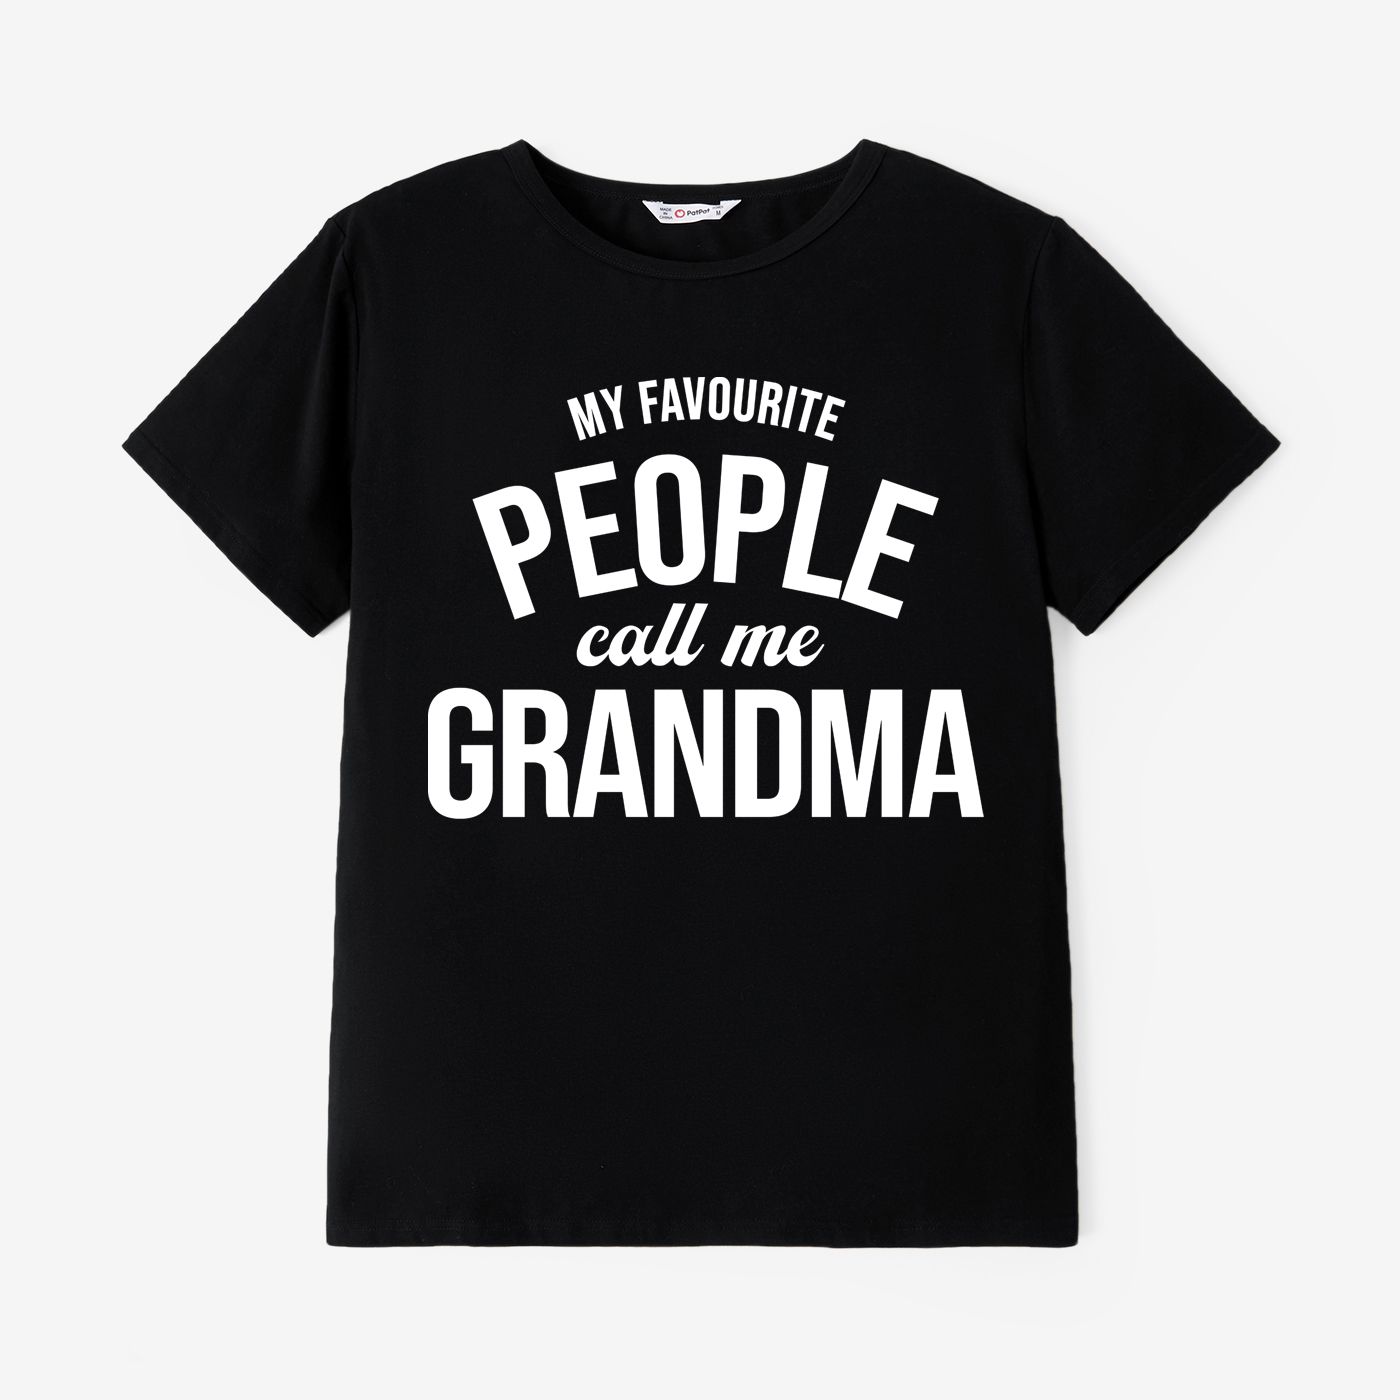 Mother's Day Grandma and Me Short Sleeves Black Slogan Print Tops